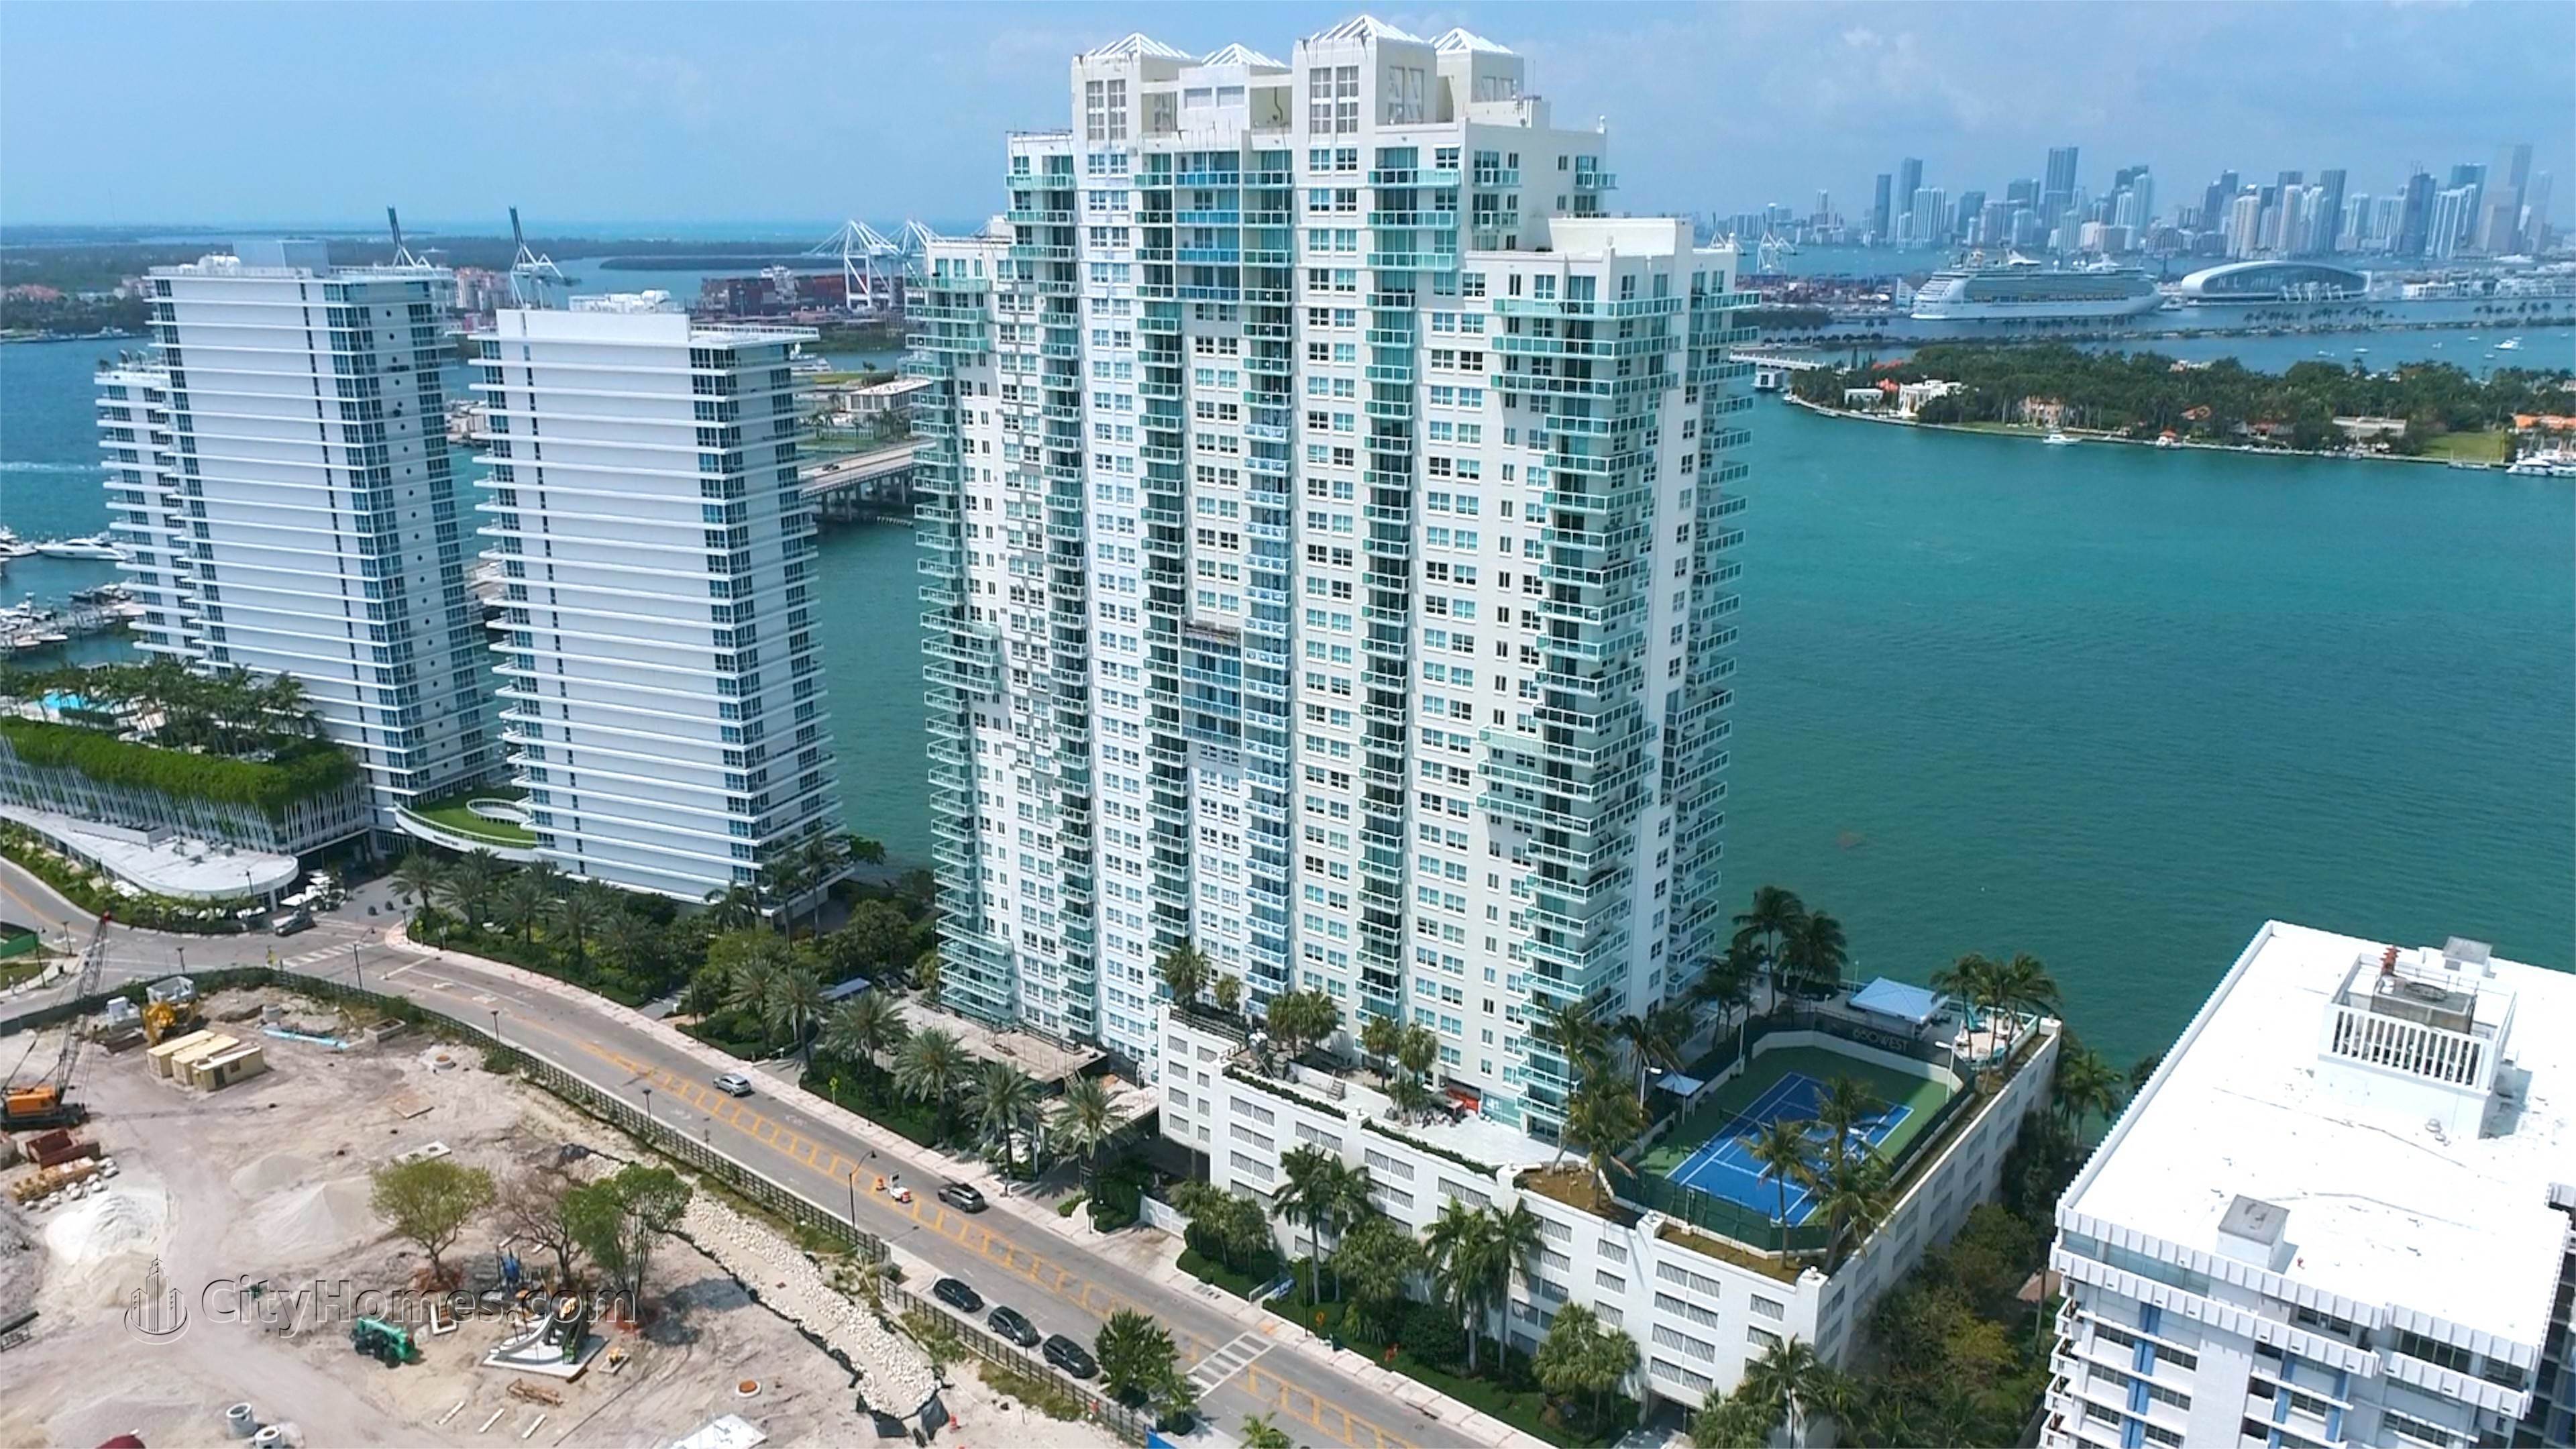 4. FLORIDIAN  building at 650 West Ave, West Avenue, Miami Beach, FL 33139